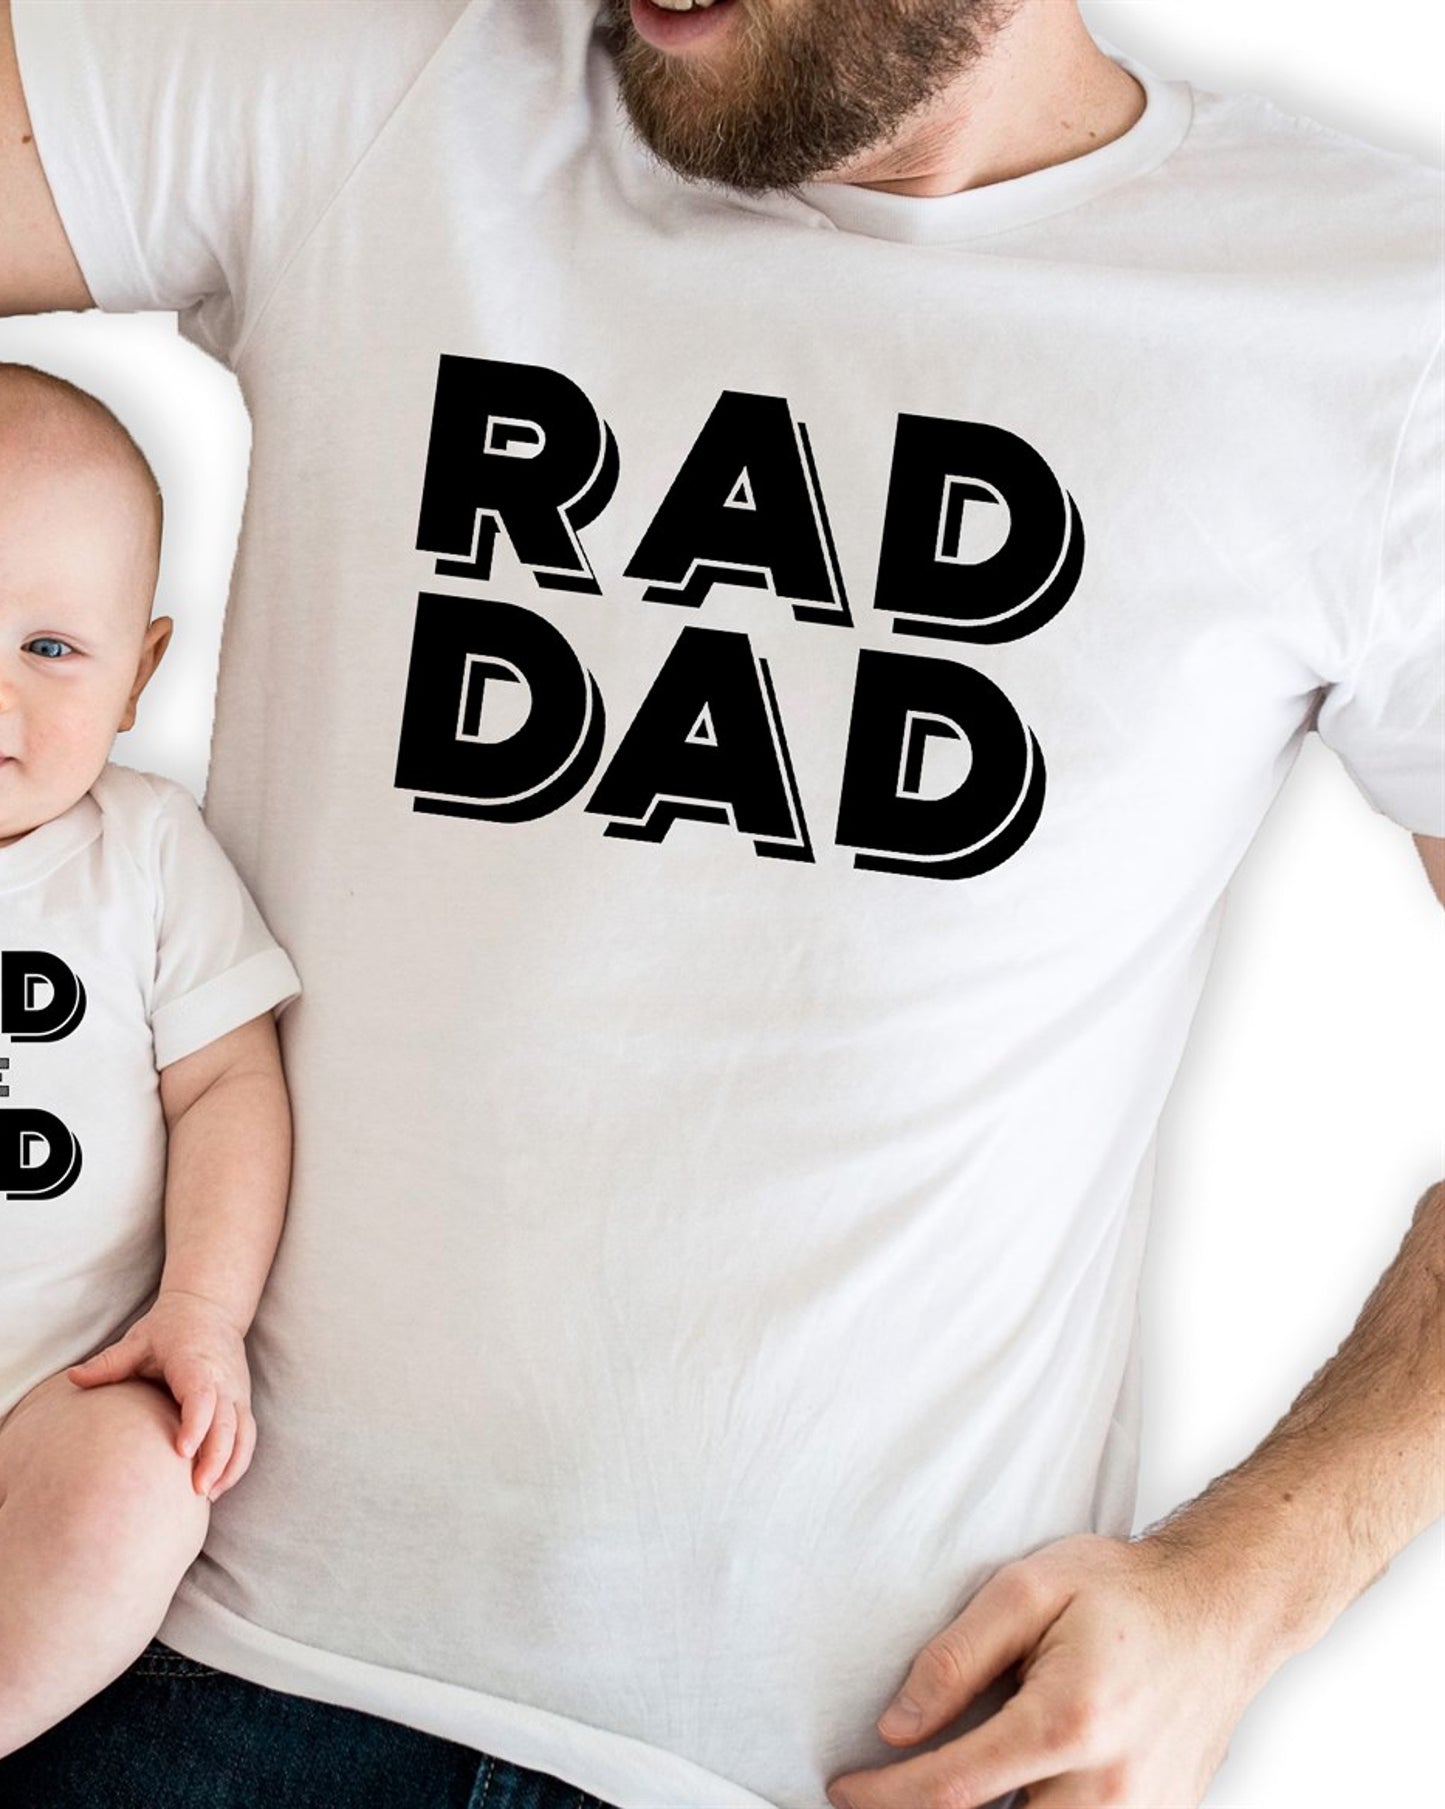 Rad Dad T-Shirt or Crew Sweatshirt